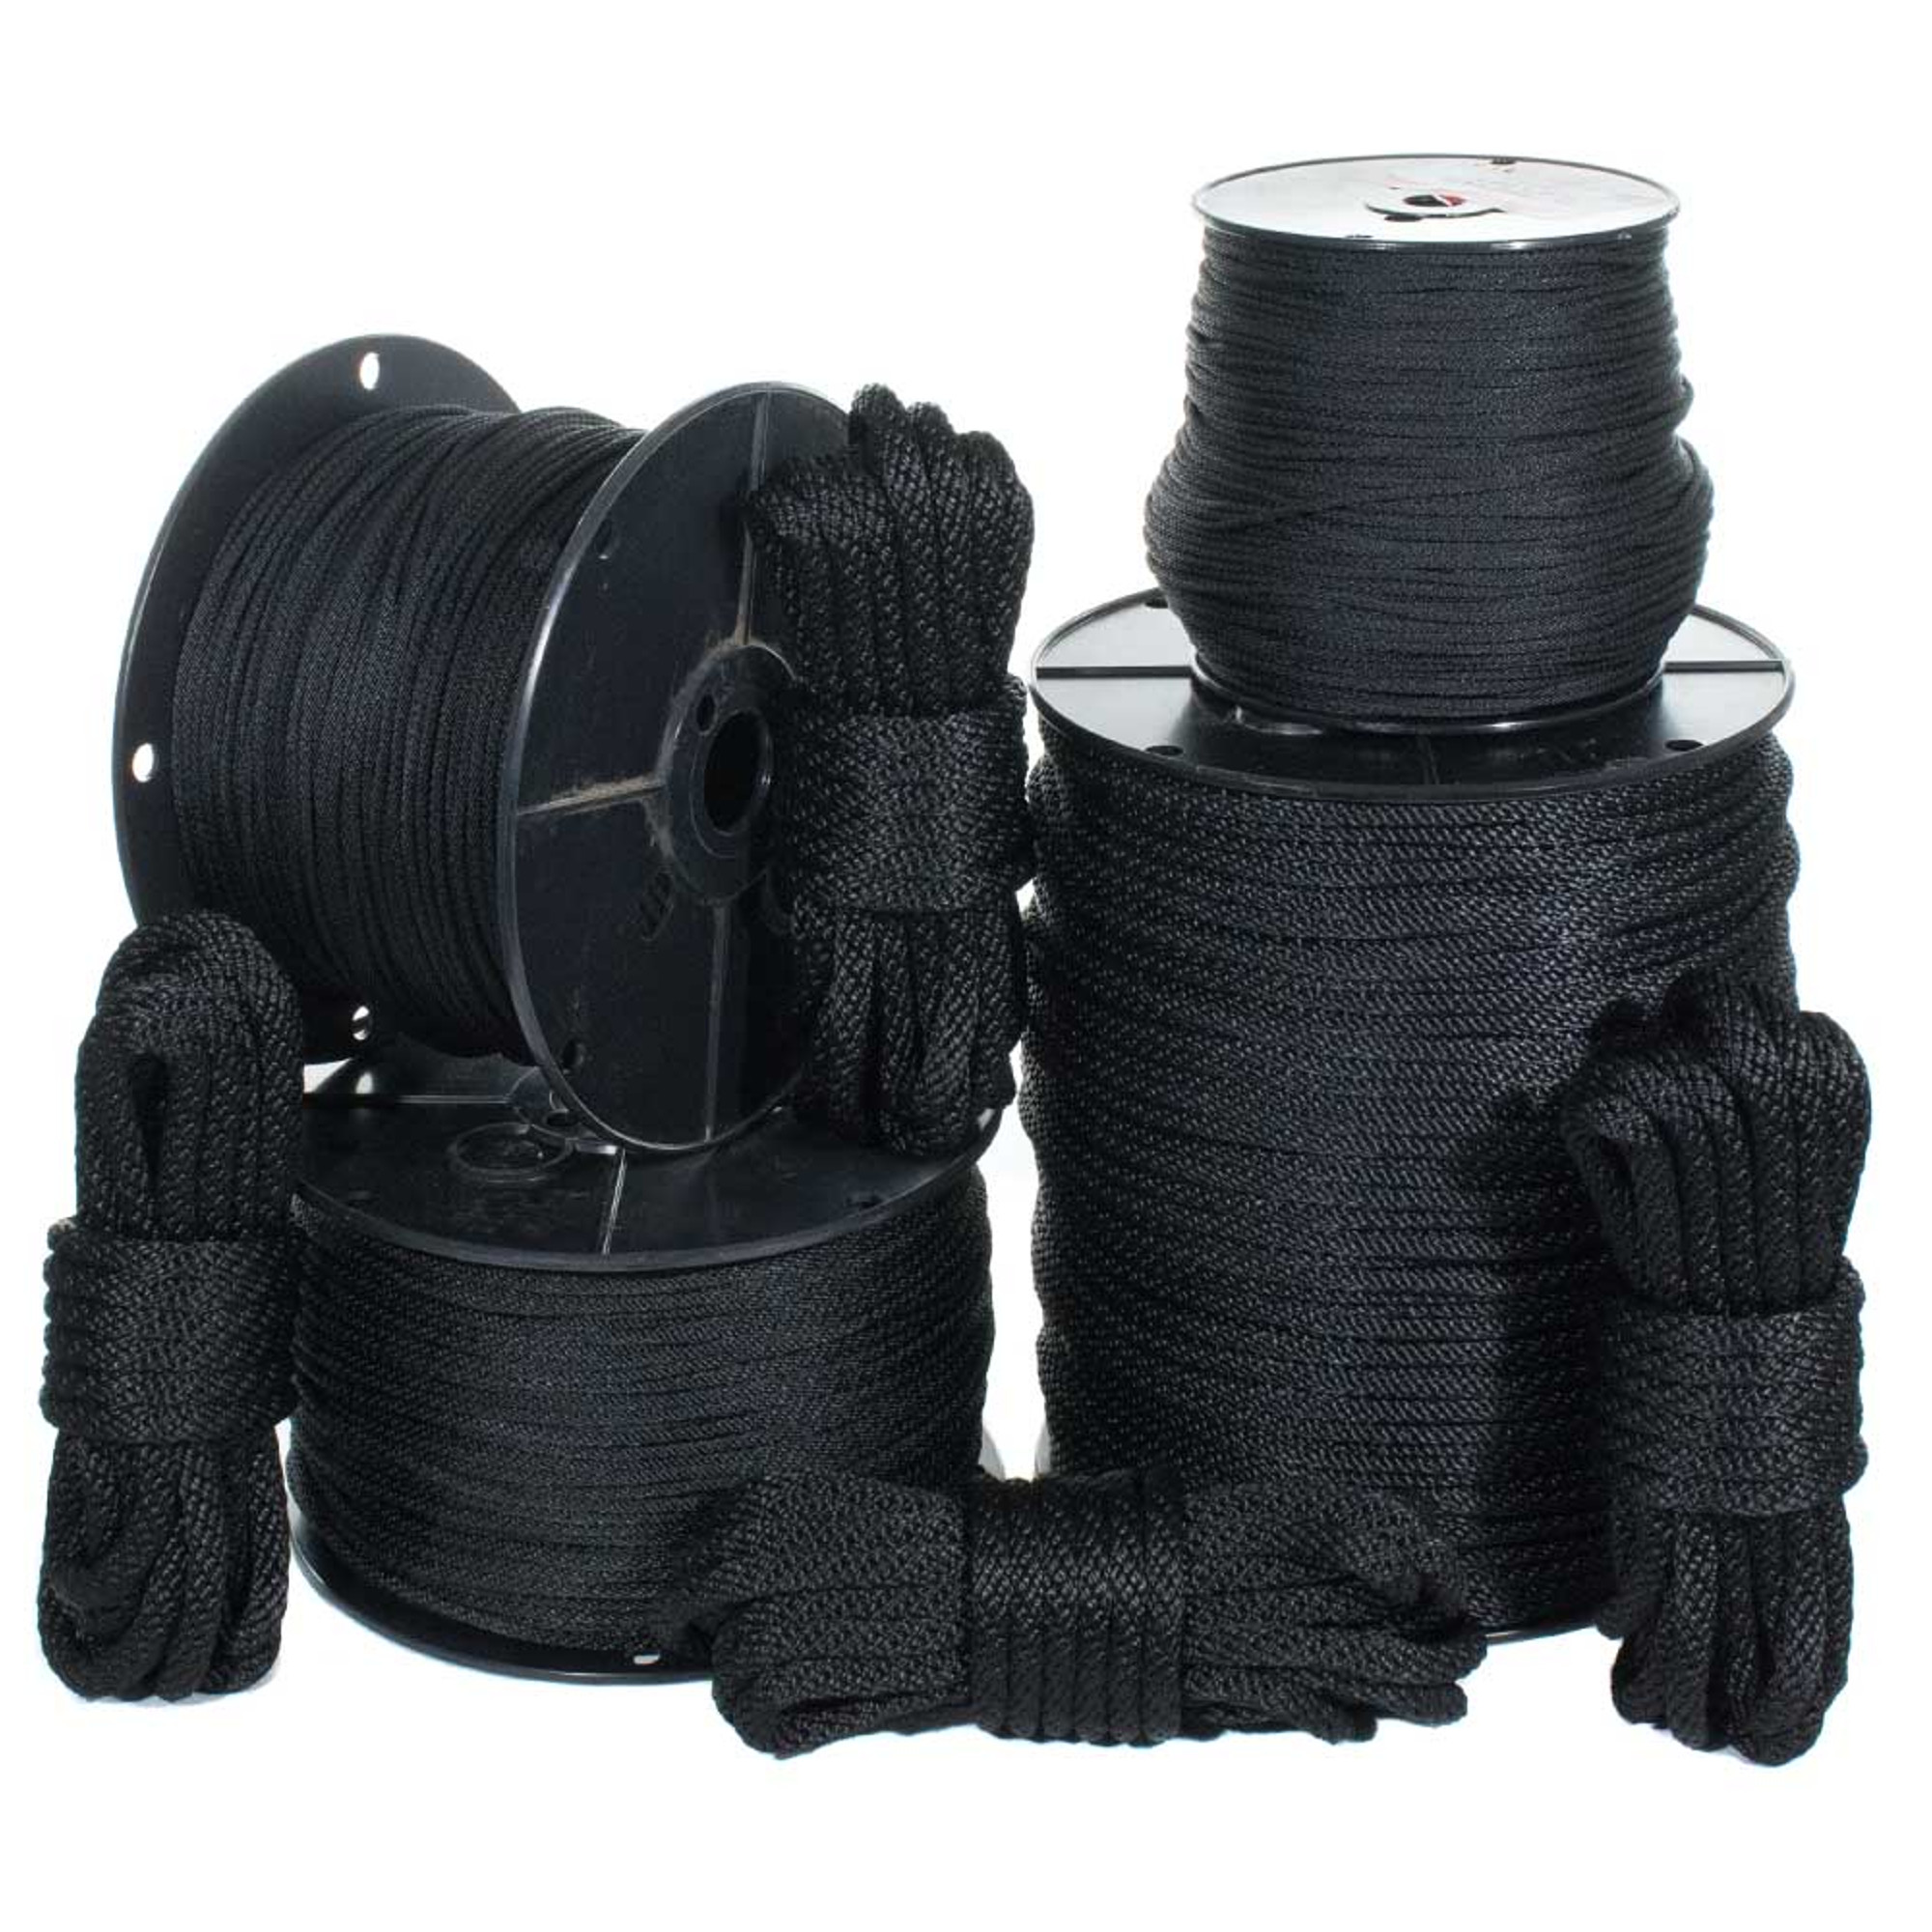 Golberg Solid Braid Black or White Nylon Rope 1/8-inch, 3/16-inch, 1/4-inch, 5/16-inch, 3/8-inch, 1/2-inch - Various Lengths - image 2 of 4